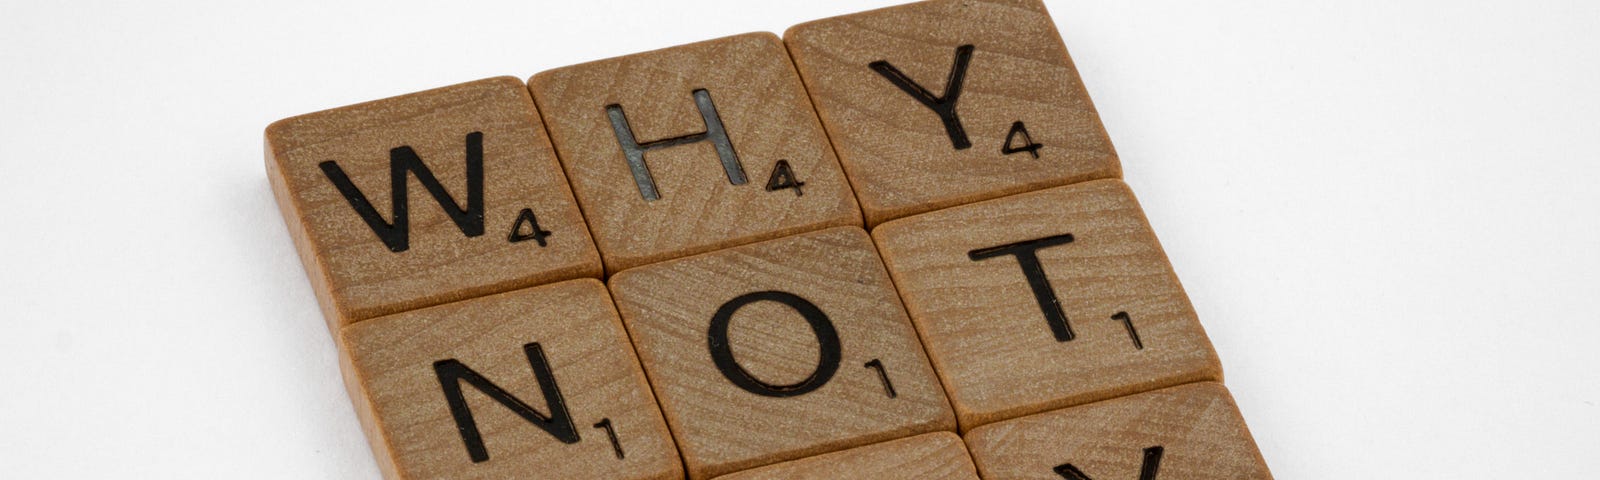 Scrabble tiles spelling “Why Not Try”